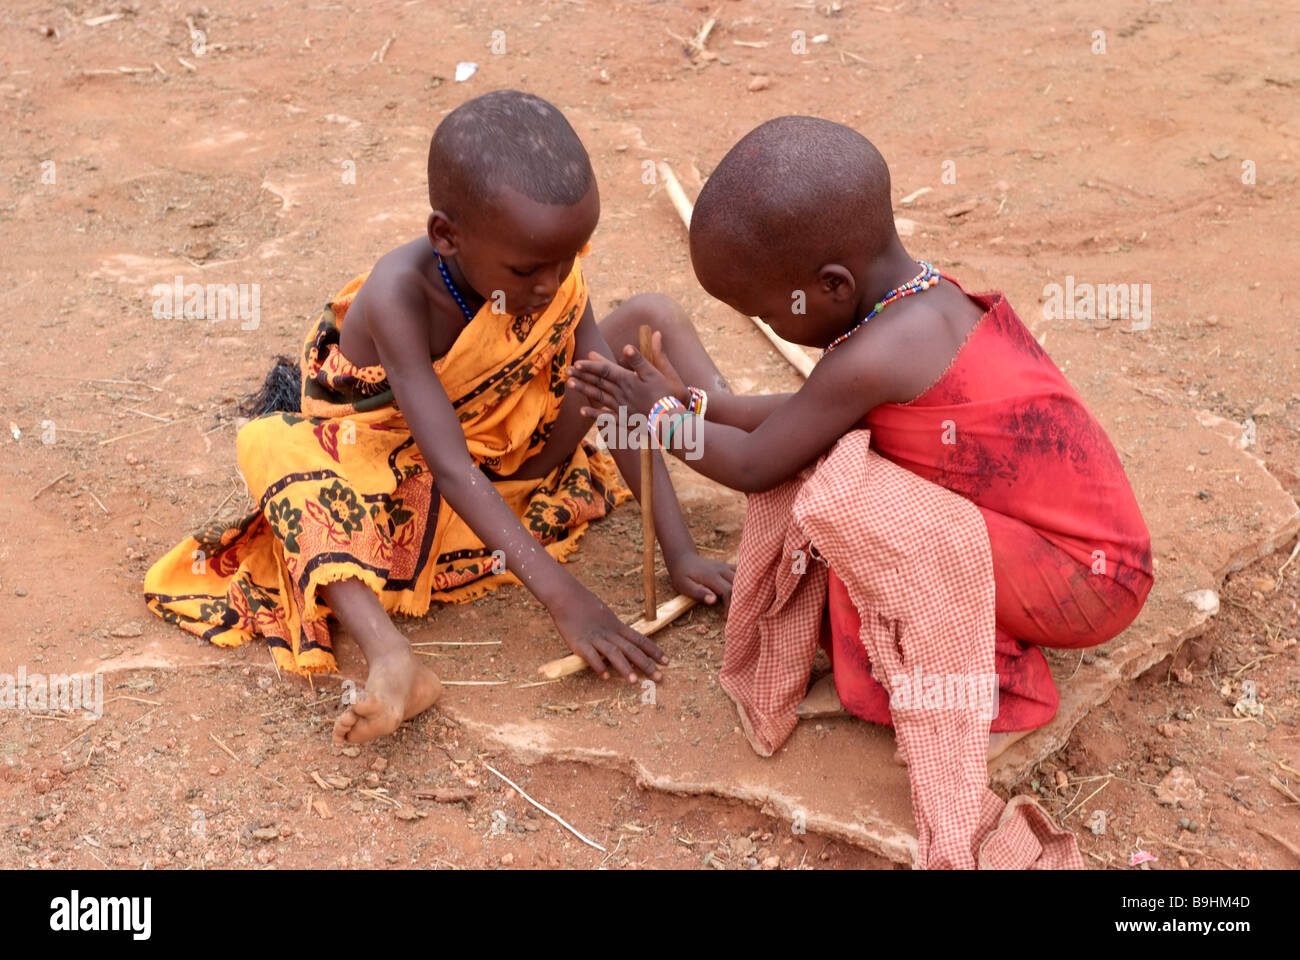 Enfants Massai feignent d'allumer un feu, le Kenya, l'Afrique Banque D'Images